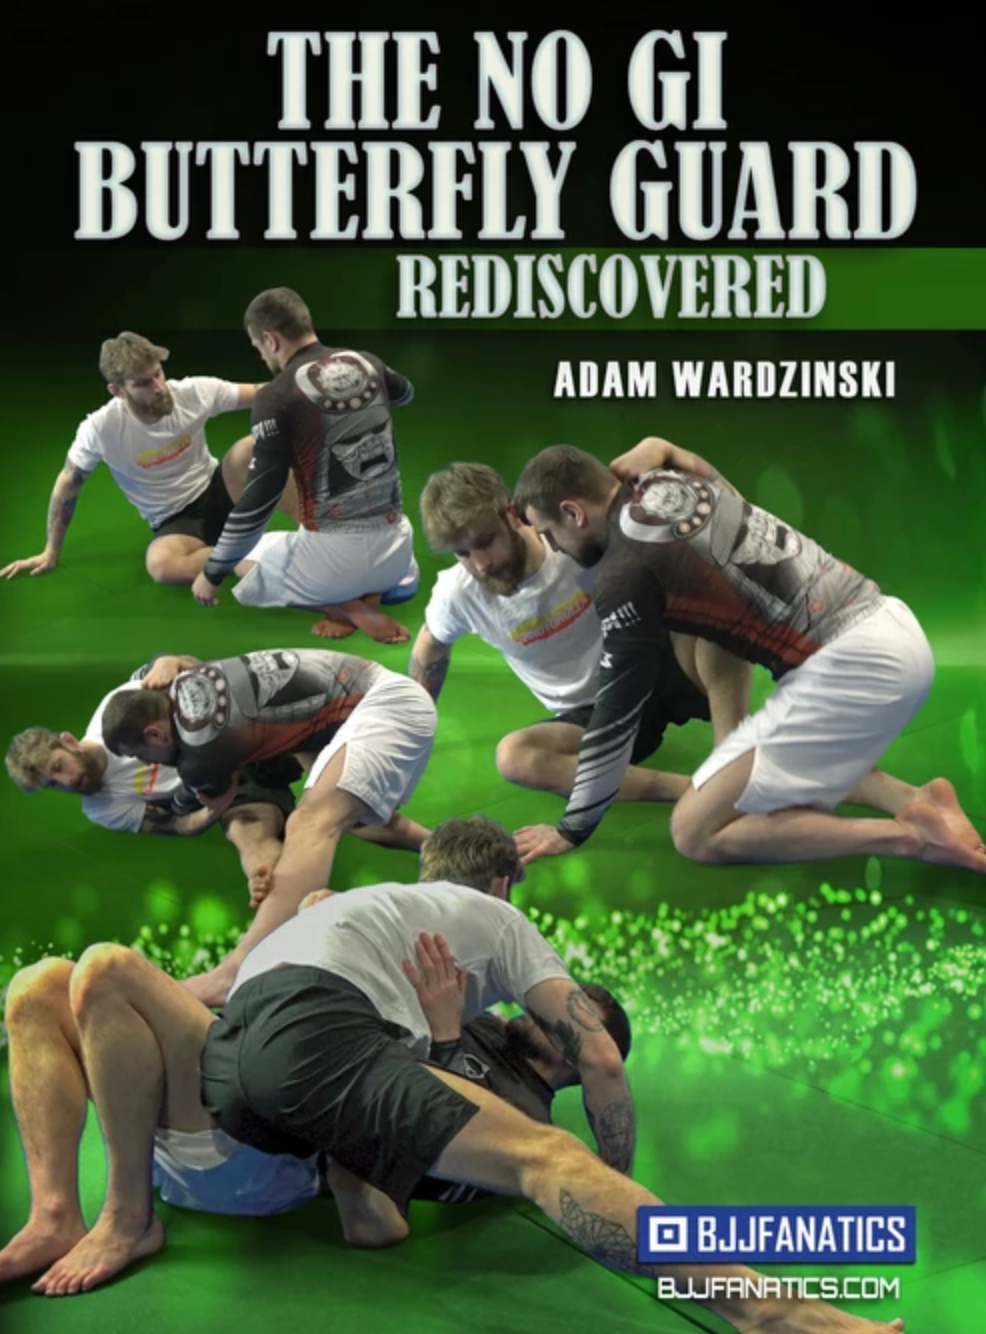 The No Gi Butterfly Guard Rediscovered 3 DVD Set by Adam Wardzinski - Budovideos Inc